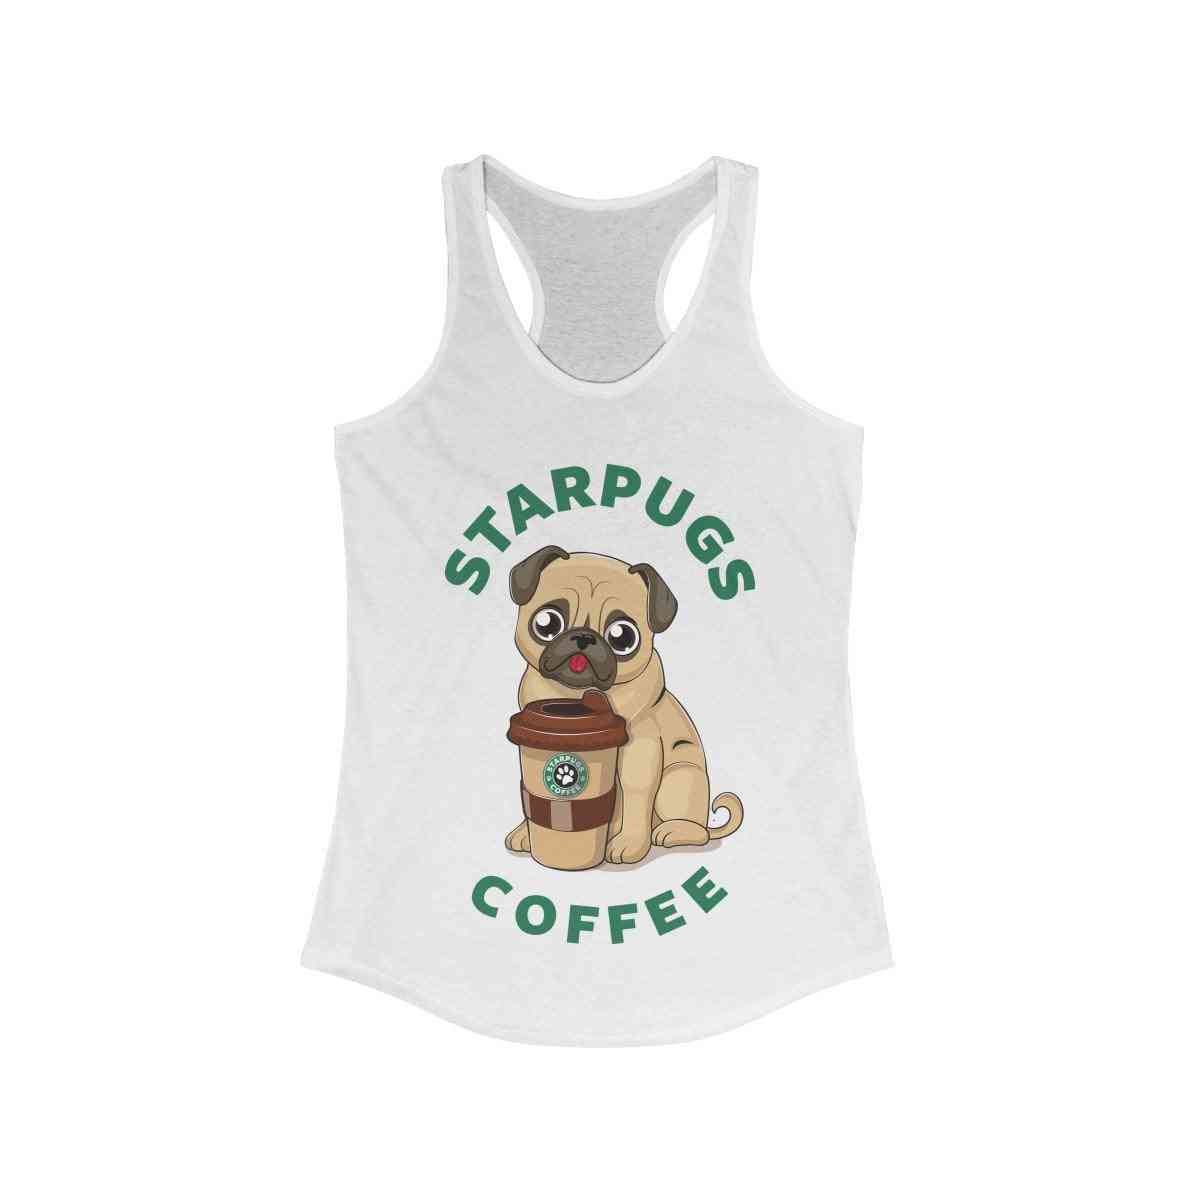 Starpugs Coffee & Pug Racerback Tank Top